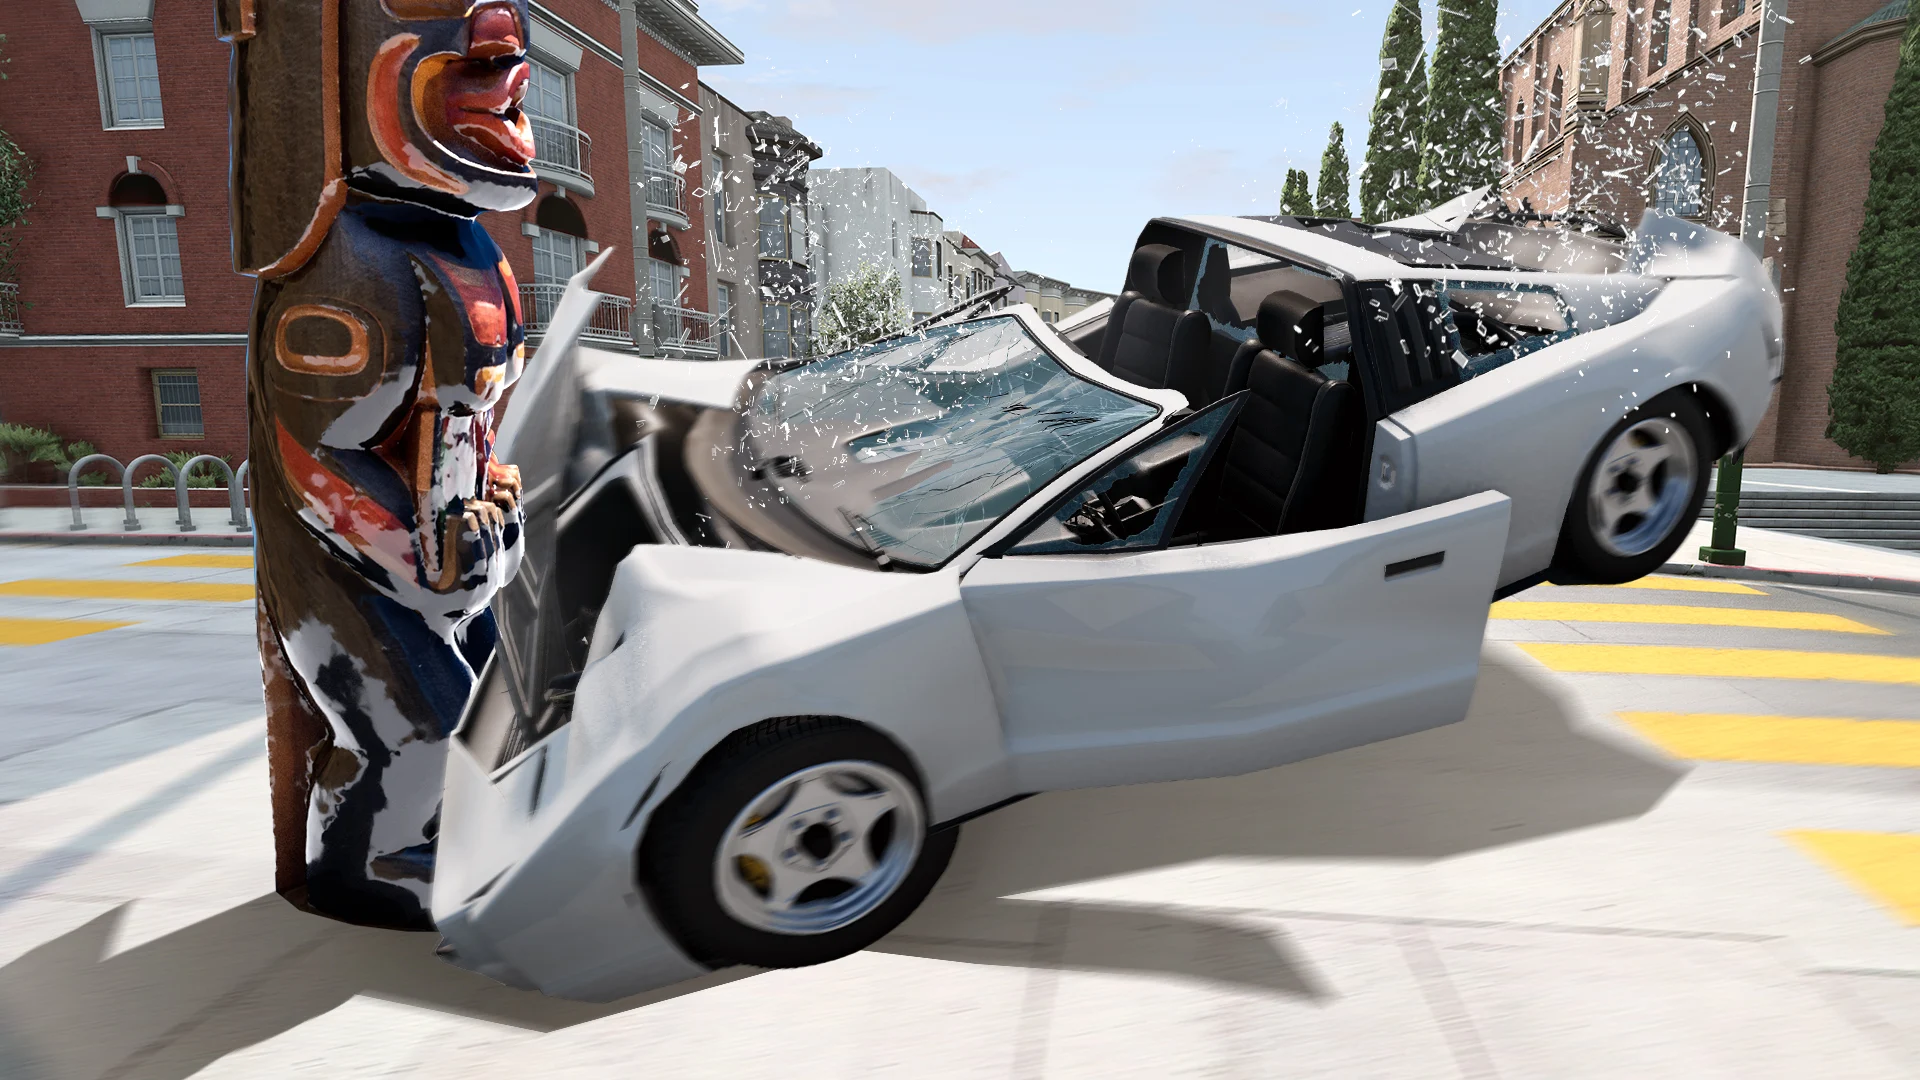 Download Car Crash Compilation Game on PC with MEmu